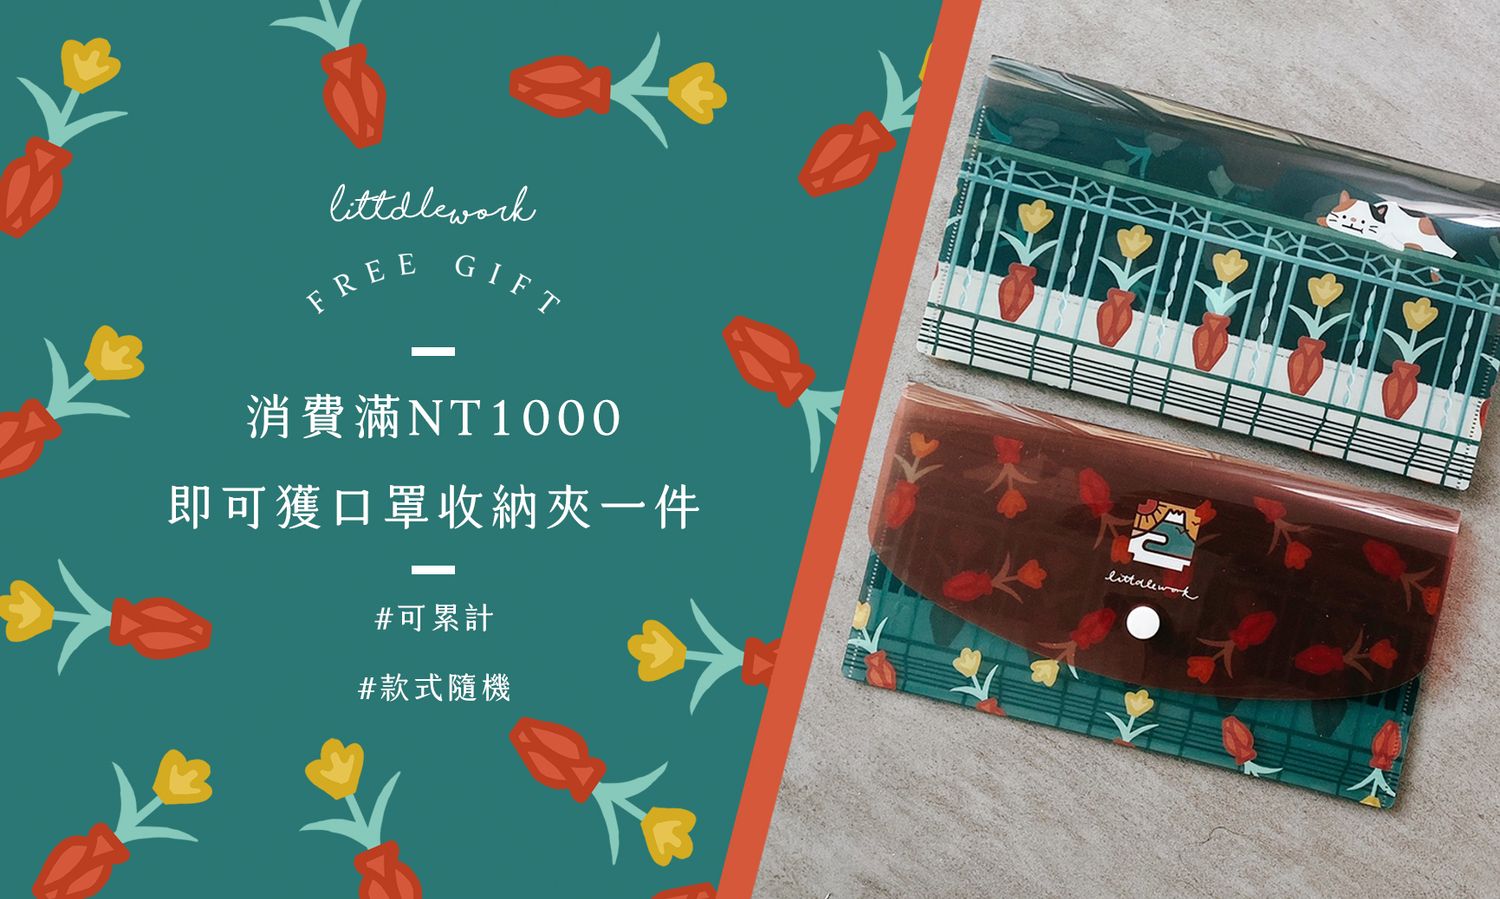 Littdlework | 台灣原創刺繡雜貨及飾品品牌 | 